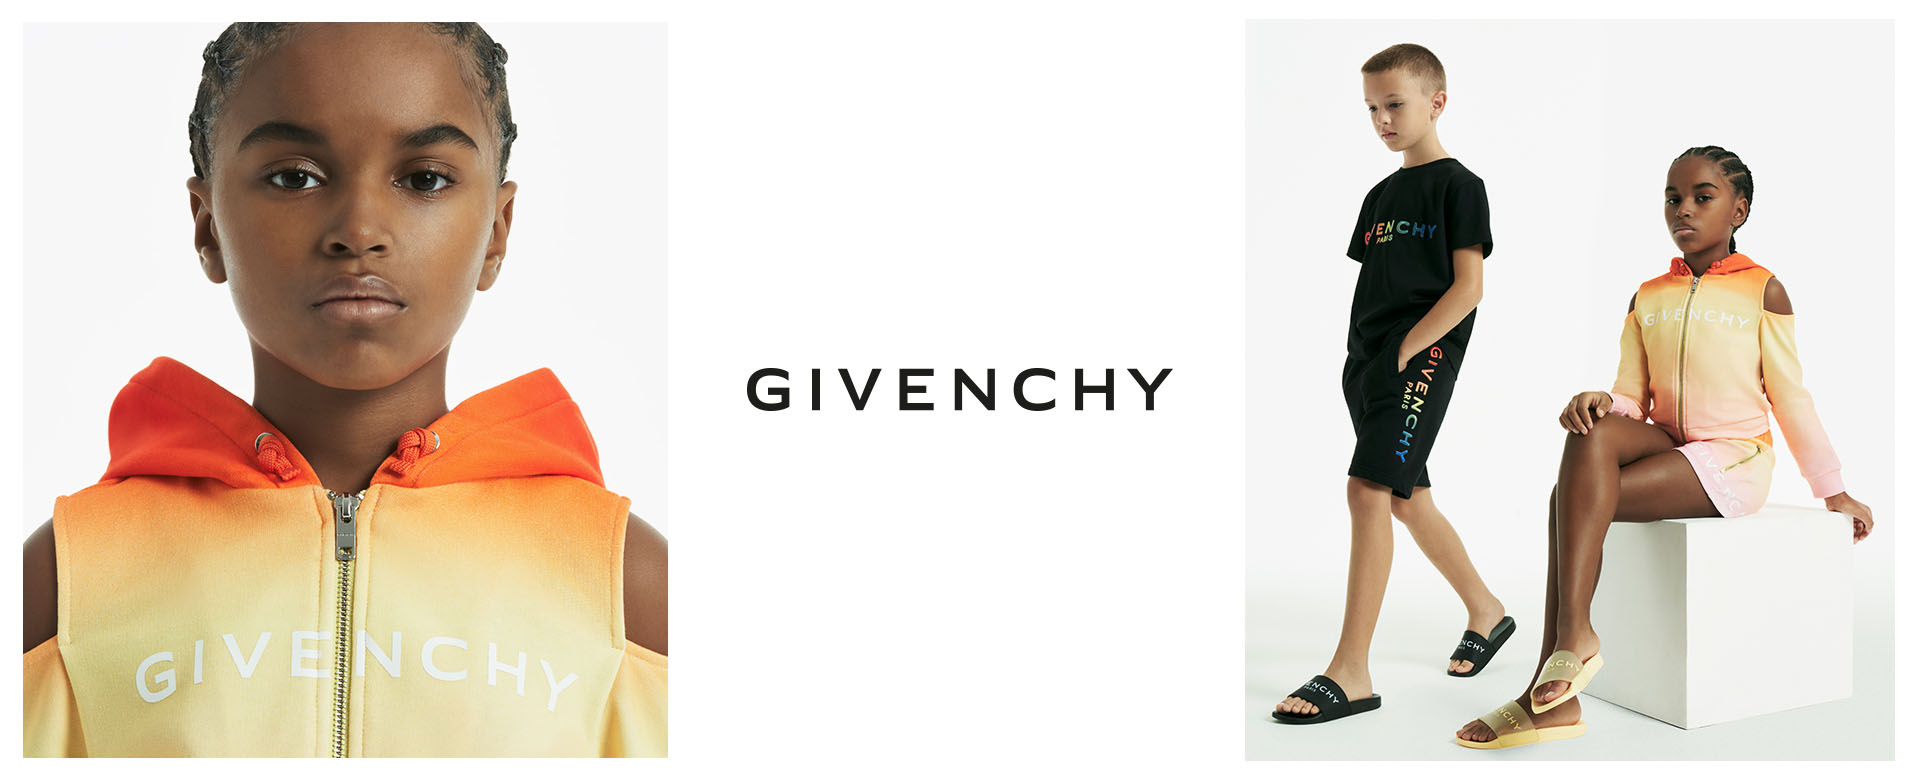 Givenchy arriva su Kids around 